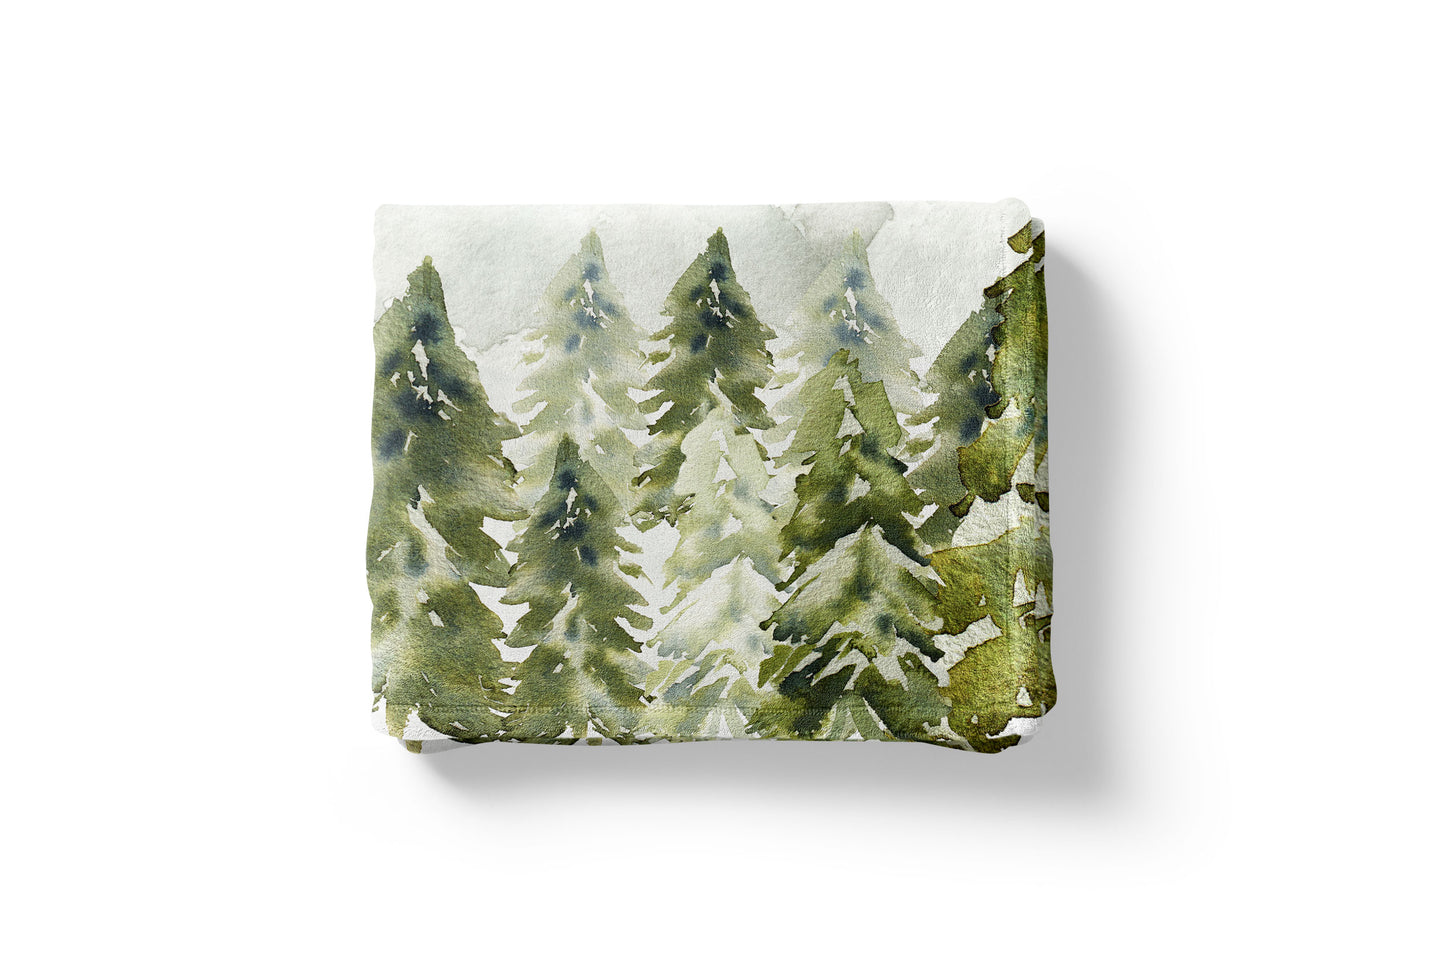 Forest Personalized Minky Blanket, Woodland Nursery Bedding - Wild Green